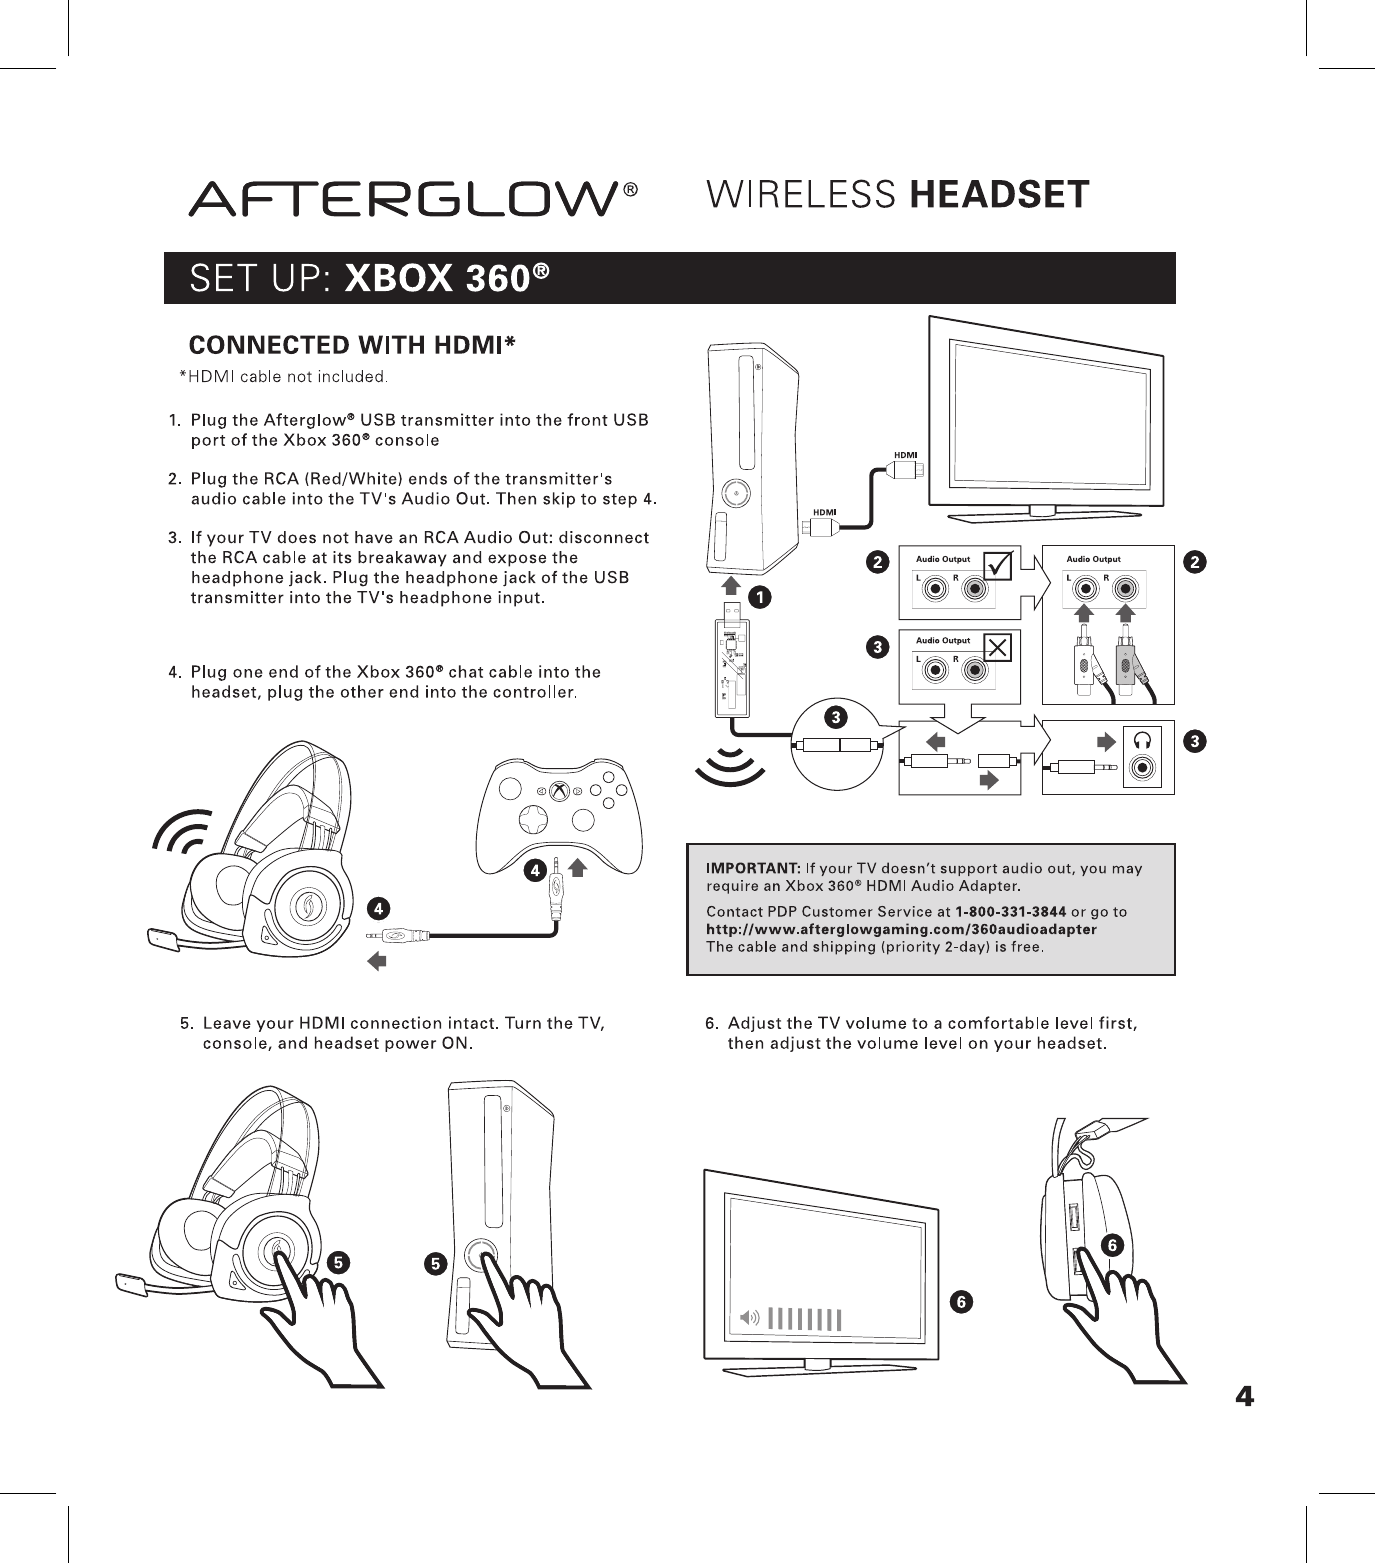 Afterglow Universal Wireless Headset User Manual - aaaheavenly